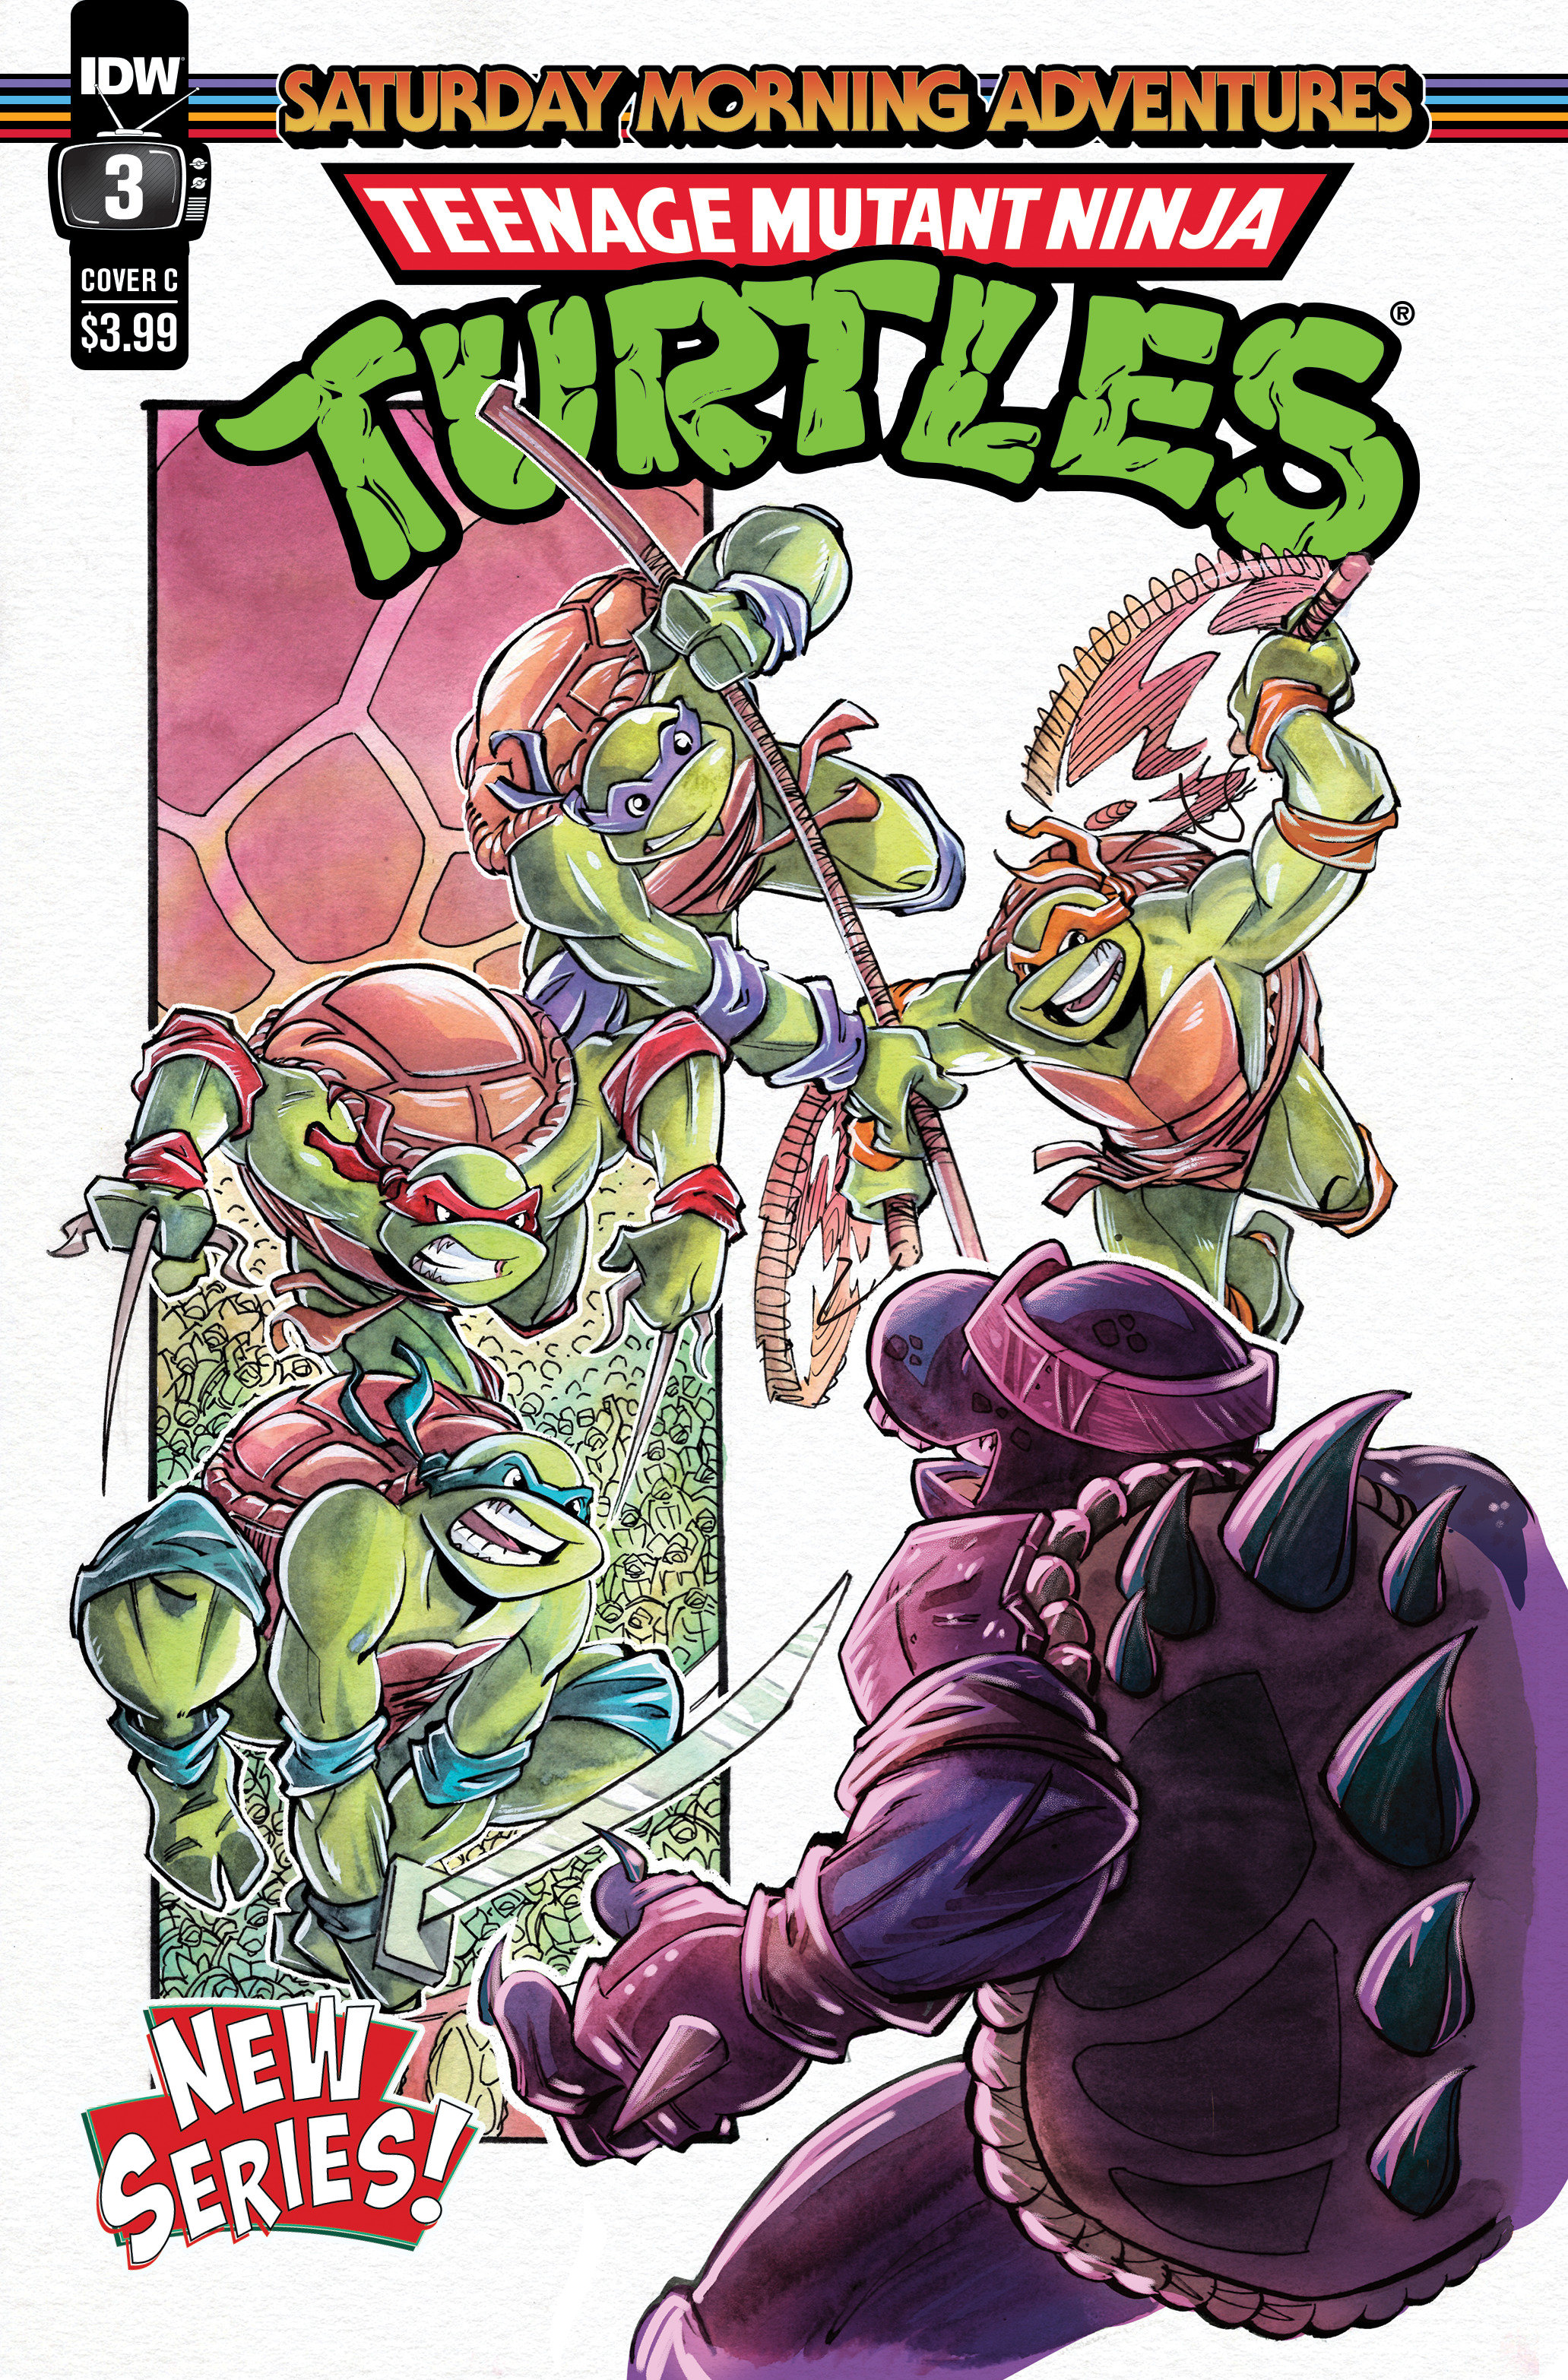 Teenage Mutant Ninja Turtles Saturday Morning Adventures Continued! #3 Cover C Daley